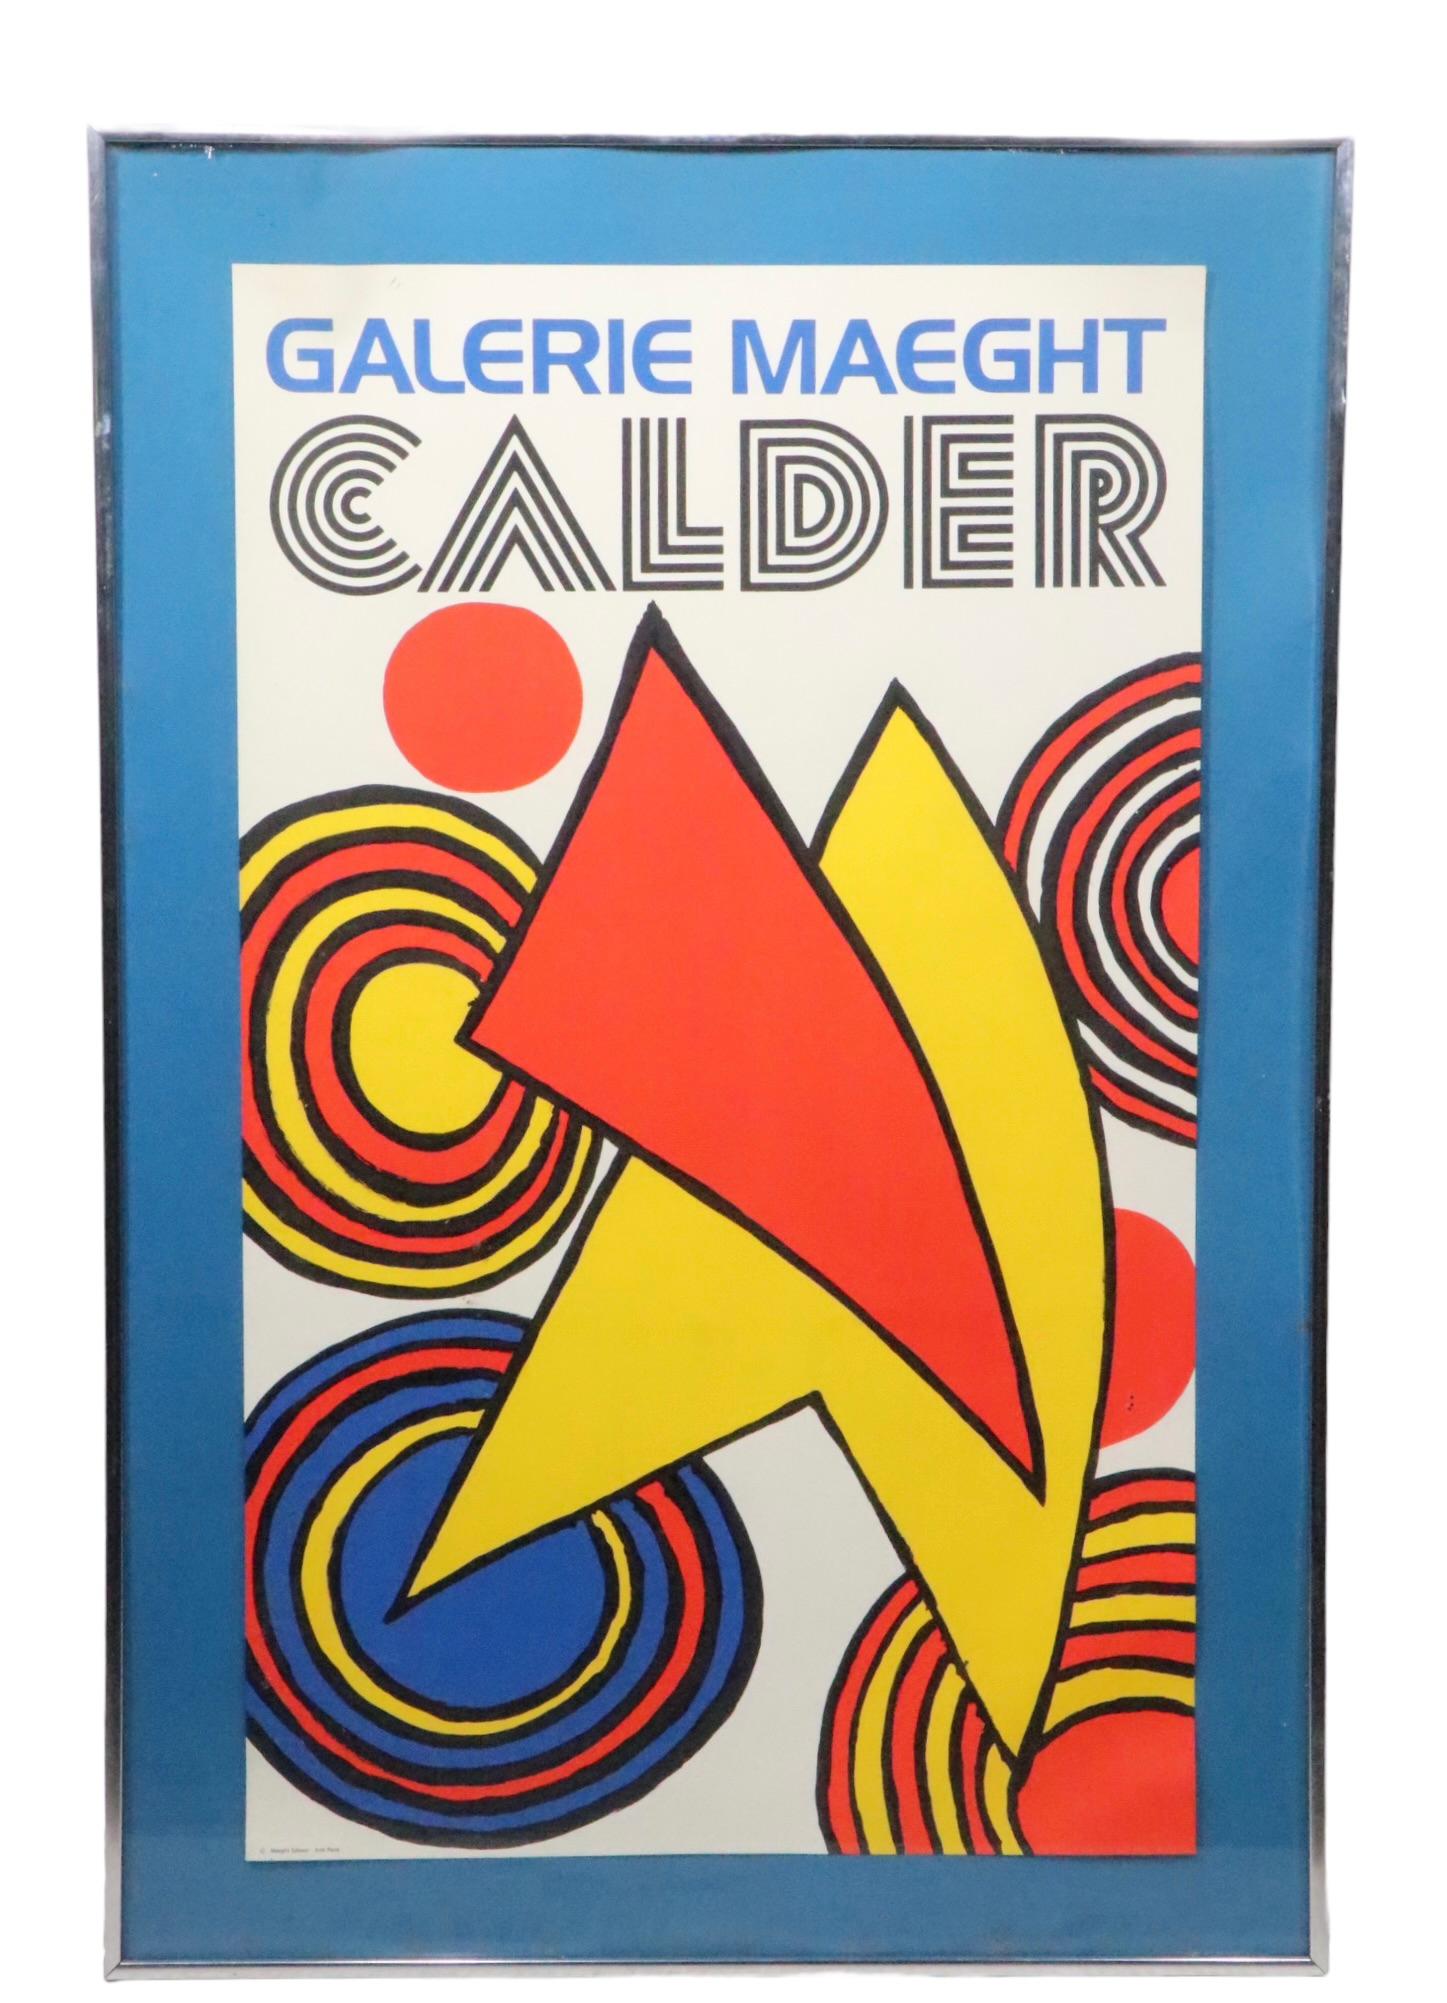  Framed Calder Galerie Maeght Lithograph  Poster Maeght Editeur - Arte Paris 70s For Sale 4